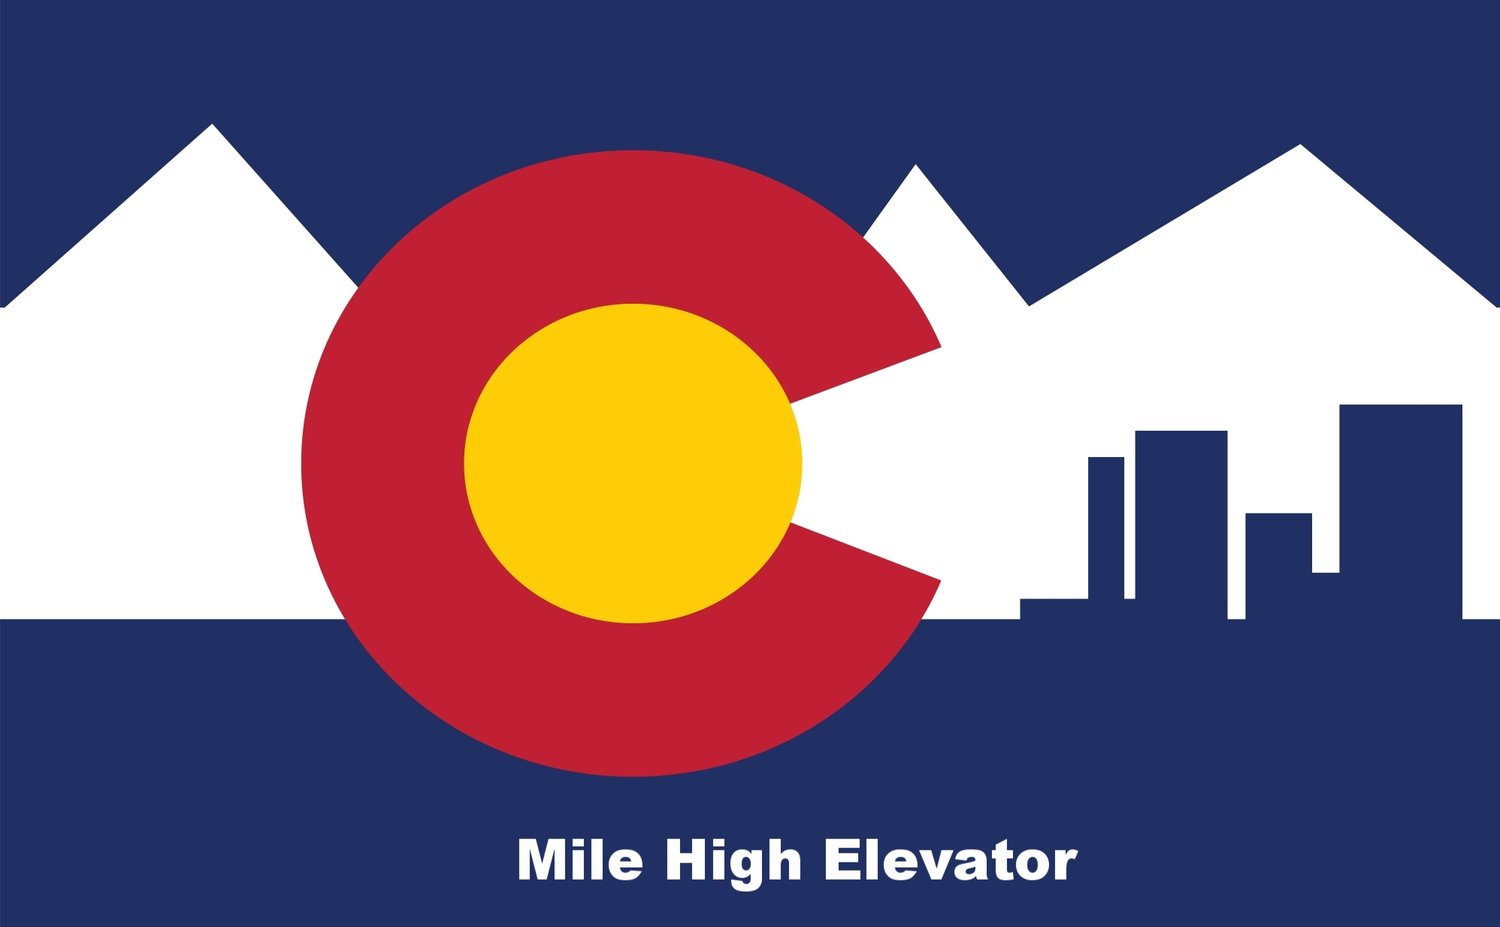  Mile High Elevator